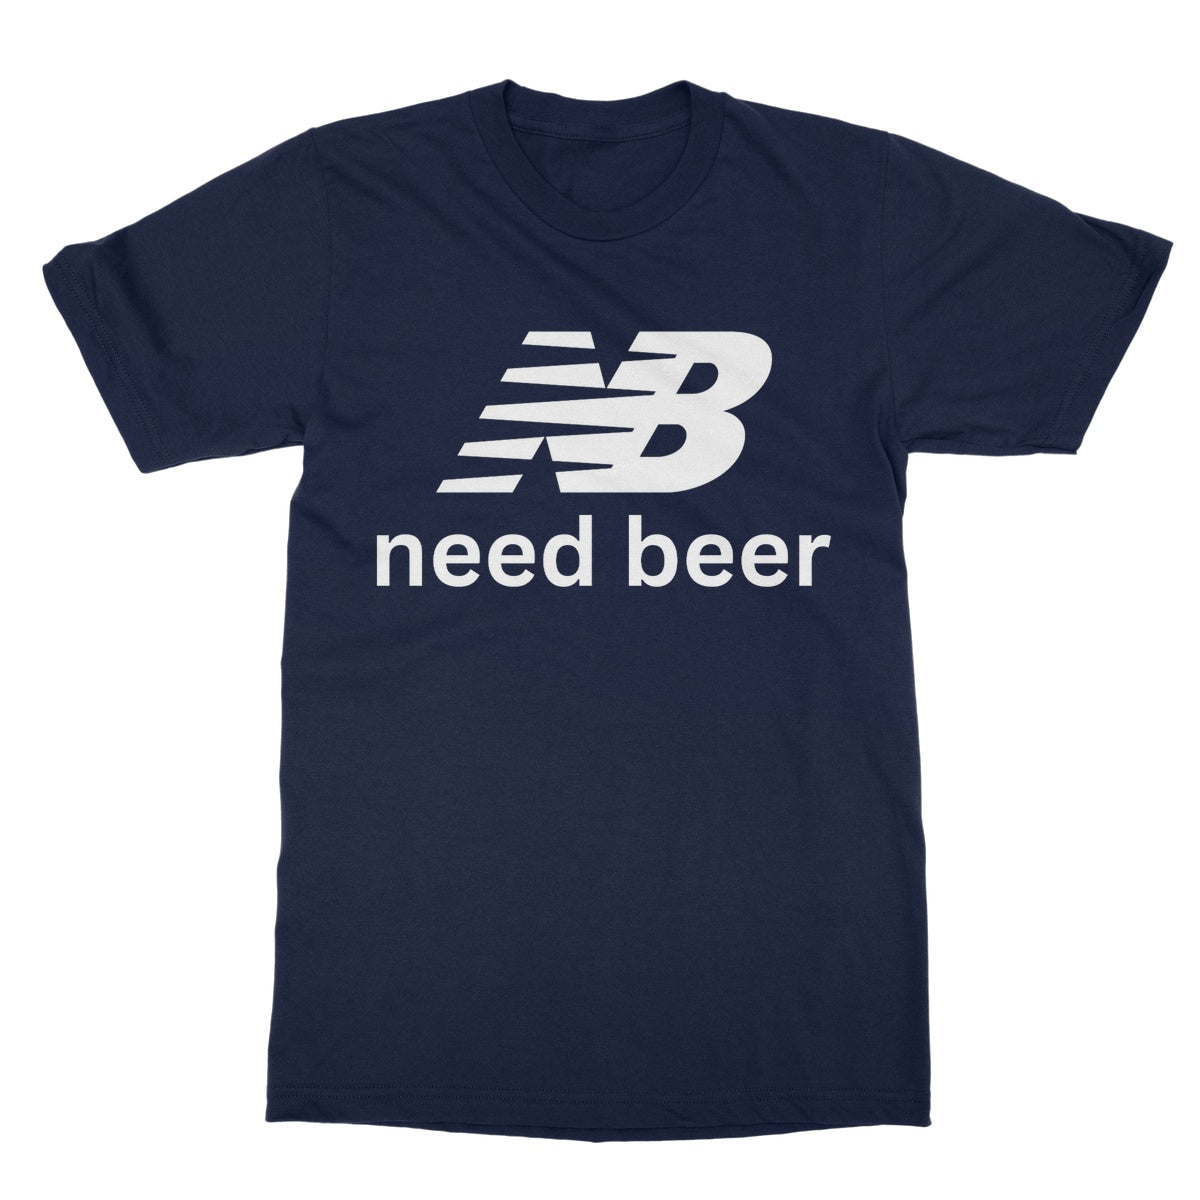 need beer t shirt navy